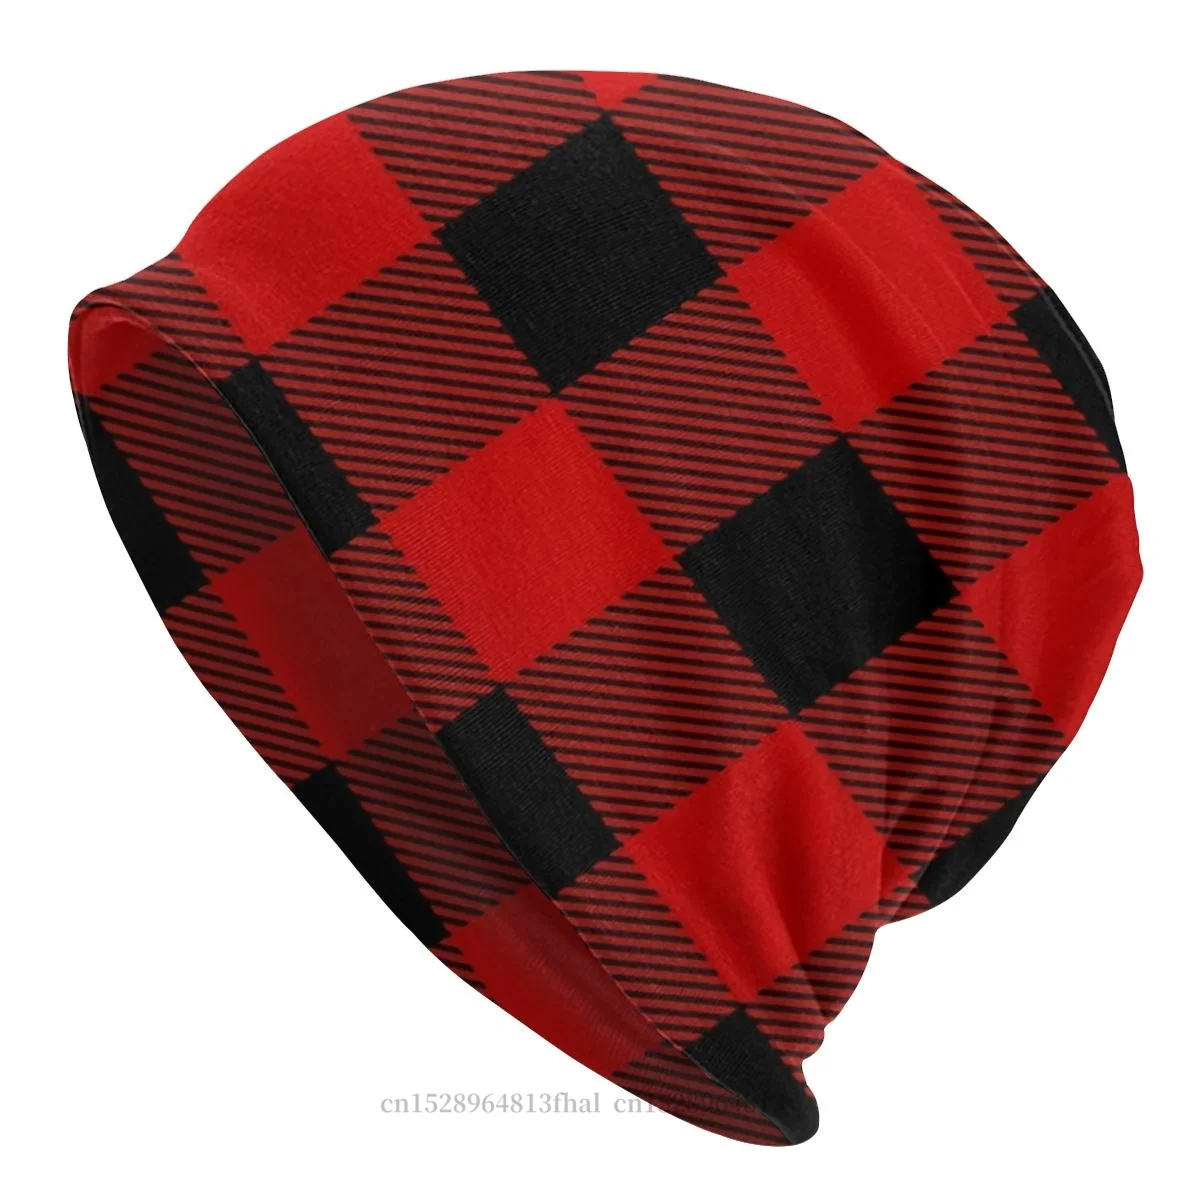 

Hat Buffalo Plaid Check Gingham Tartan Twill Red Black Fashion Caps For Men Women Skullies Beanies Ski Caps Soft Bonnet Hats